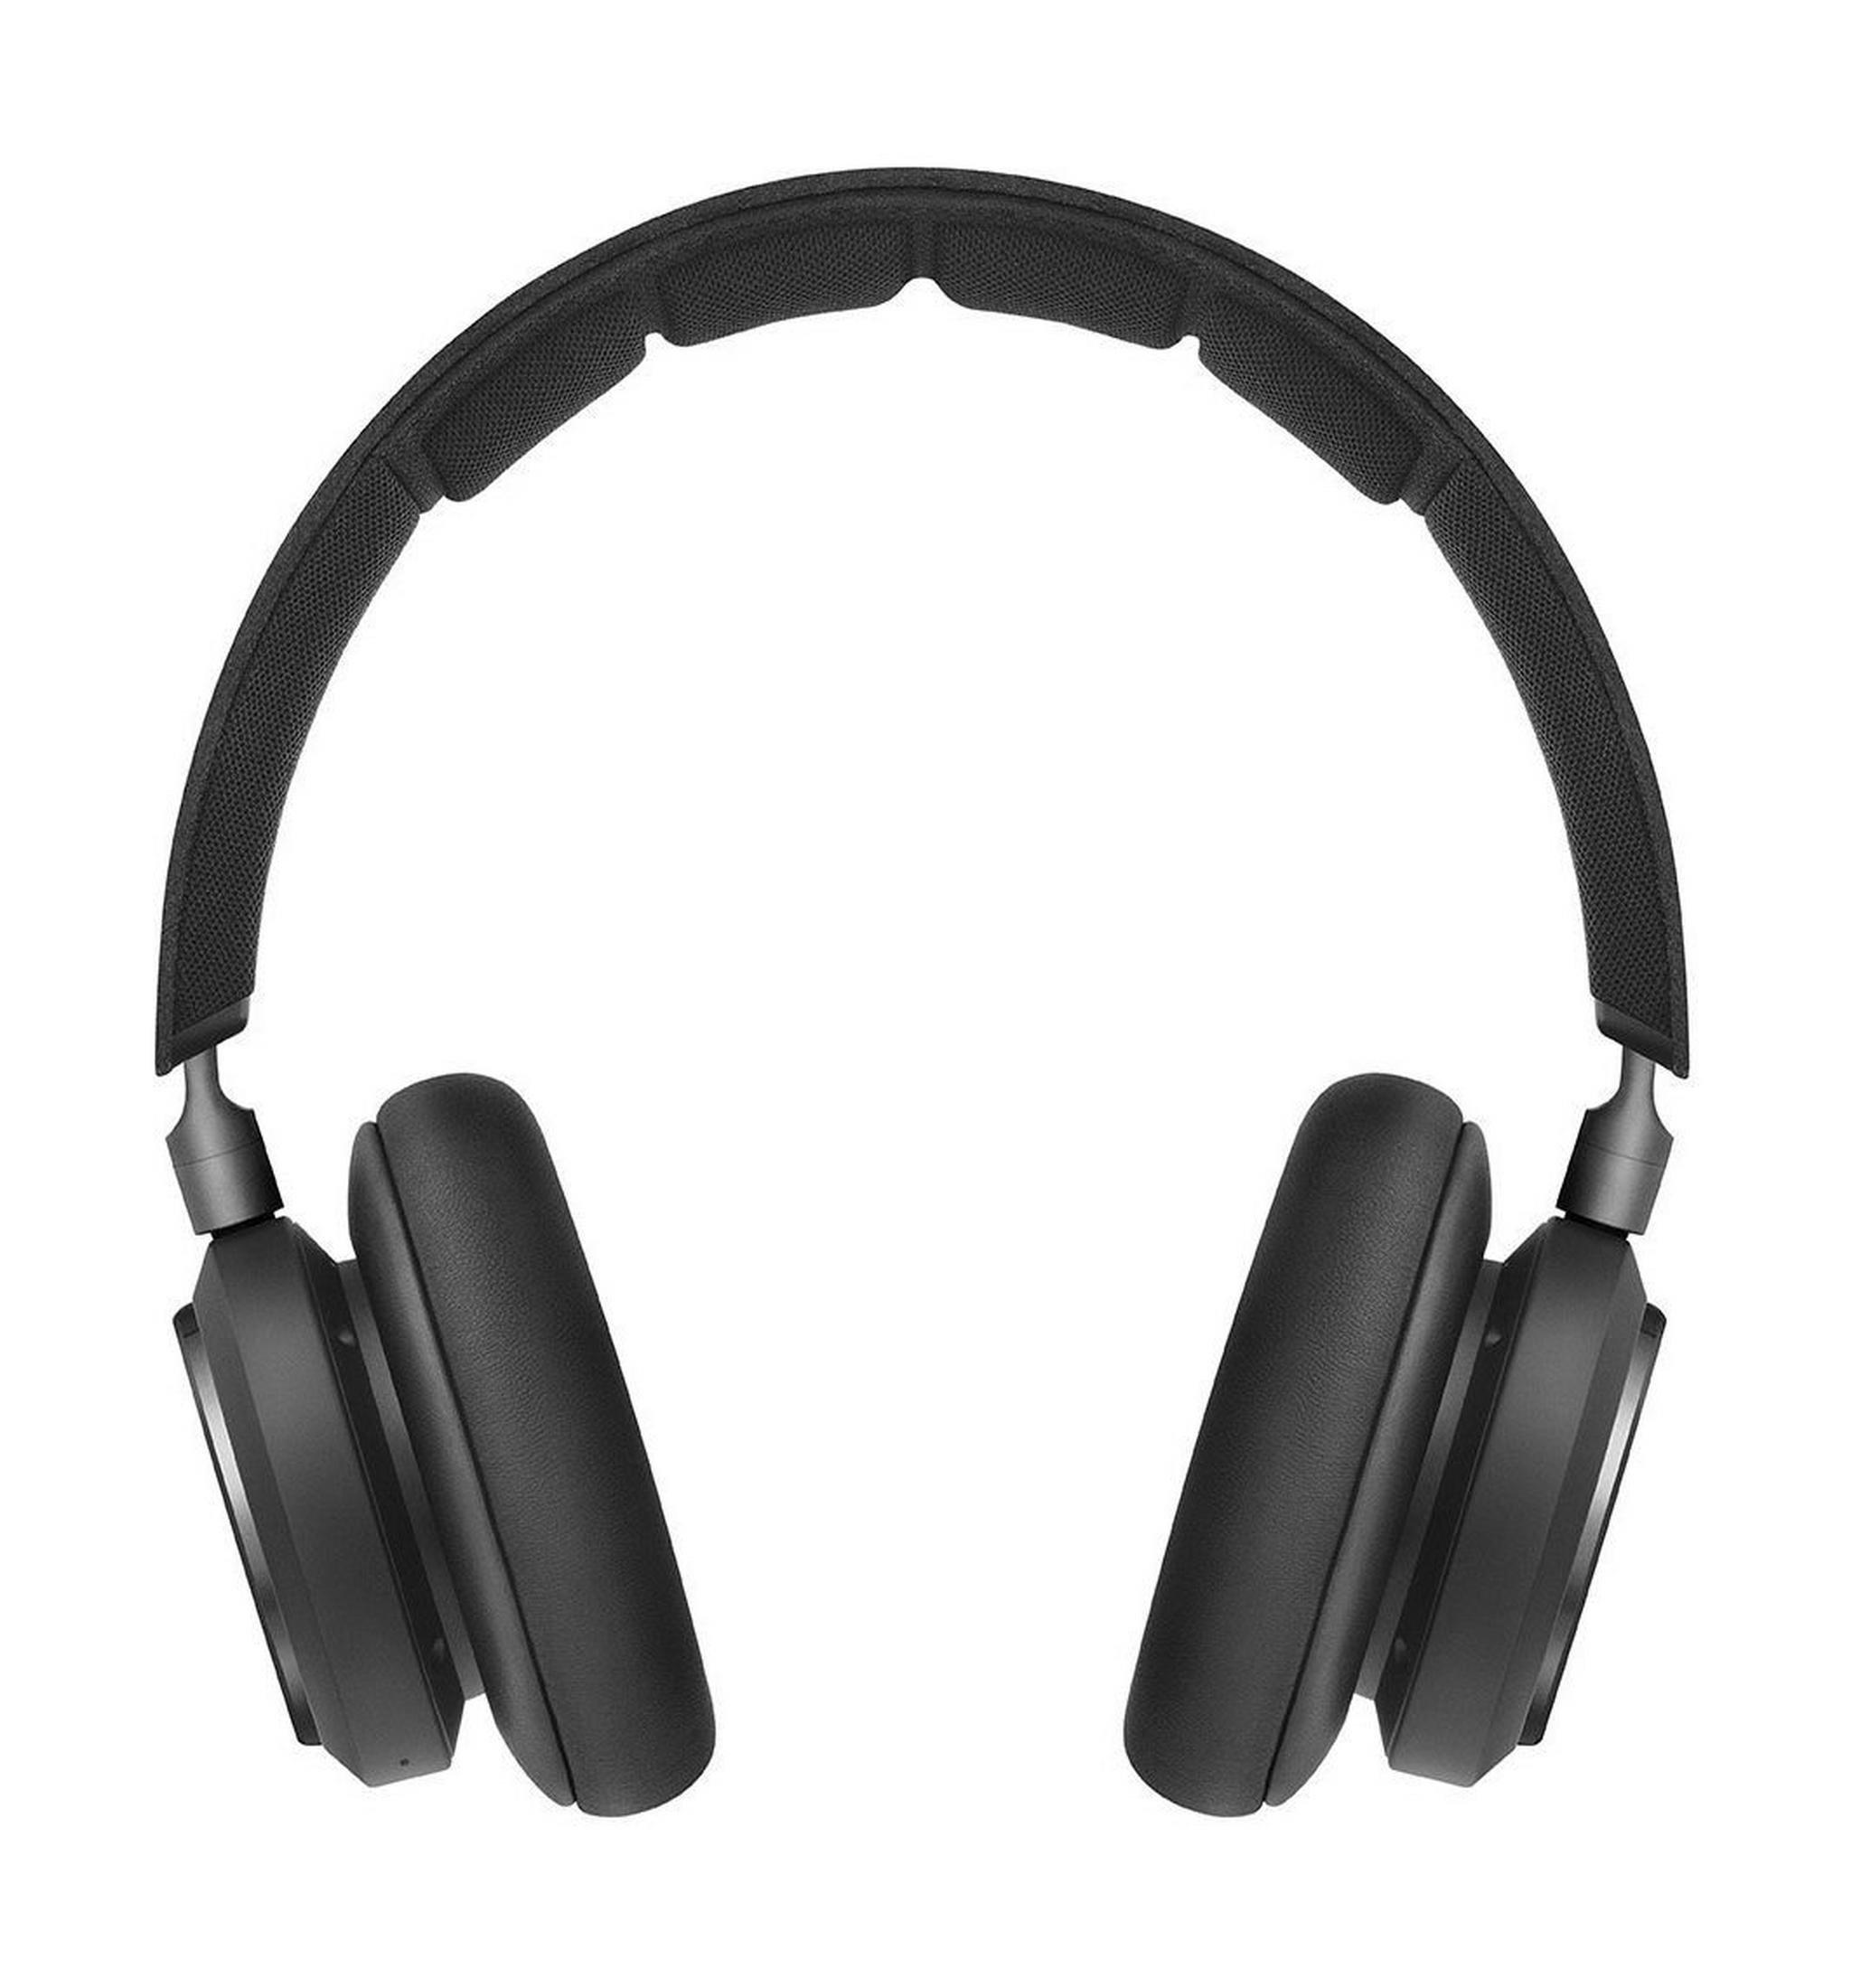 Bang & Olufsen Beoplay H9i Wireless Bluetooth On-Ear Headphone - Black